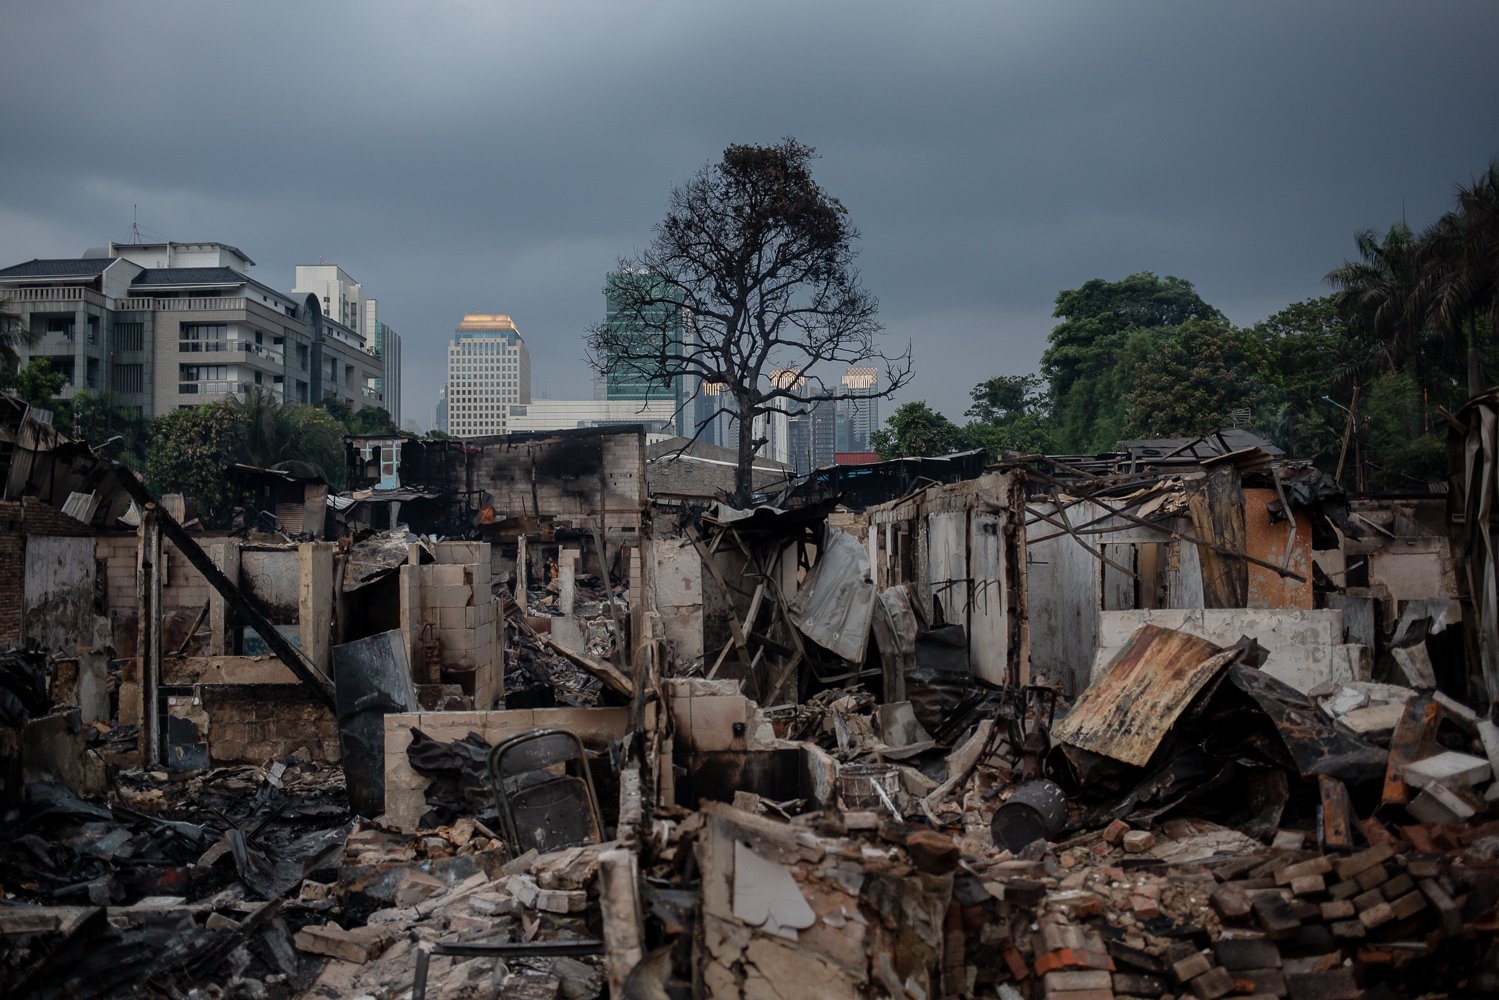 Reruntuhan bagunan rumah semi permanen yang hangus dilahap si jago merah di pemukiman padat penduduk di Jalan Simprug Golf II, Kecamatan Kebayoran Lama, Jakarta, Minggu (21/8). Akibat peristiwa tersebut 1 orang meninggal dunia diduga akibat kaget dan kelelahan. Selain itu, sebanyak 383 jiwa dari 164 KK harus mengungsi di tenda darurat.